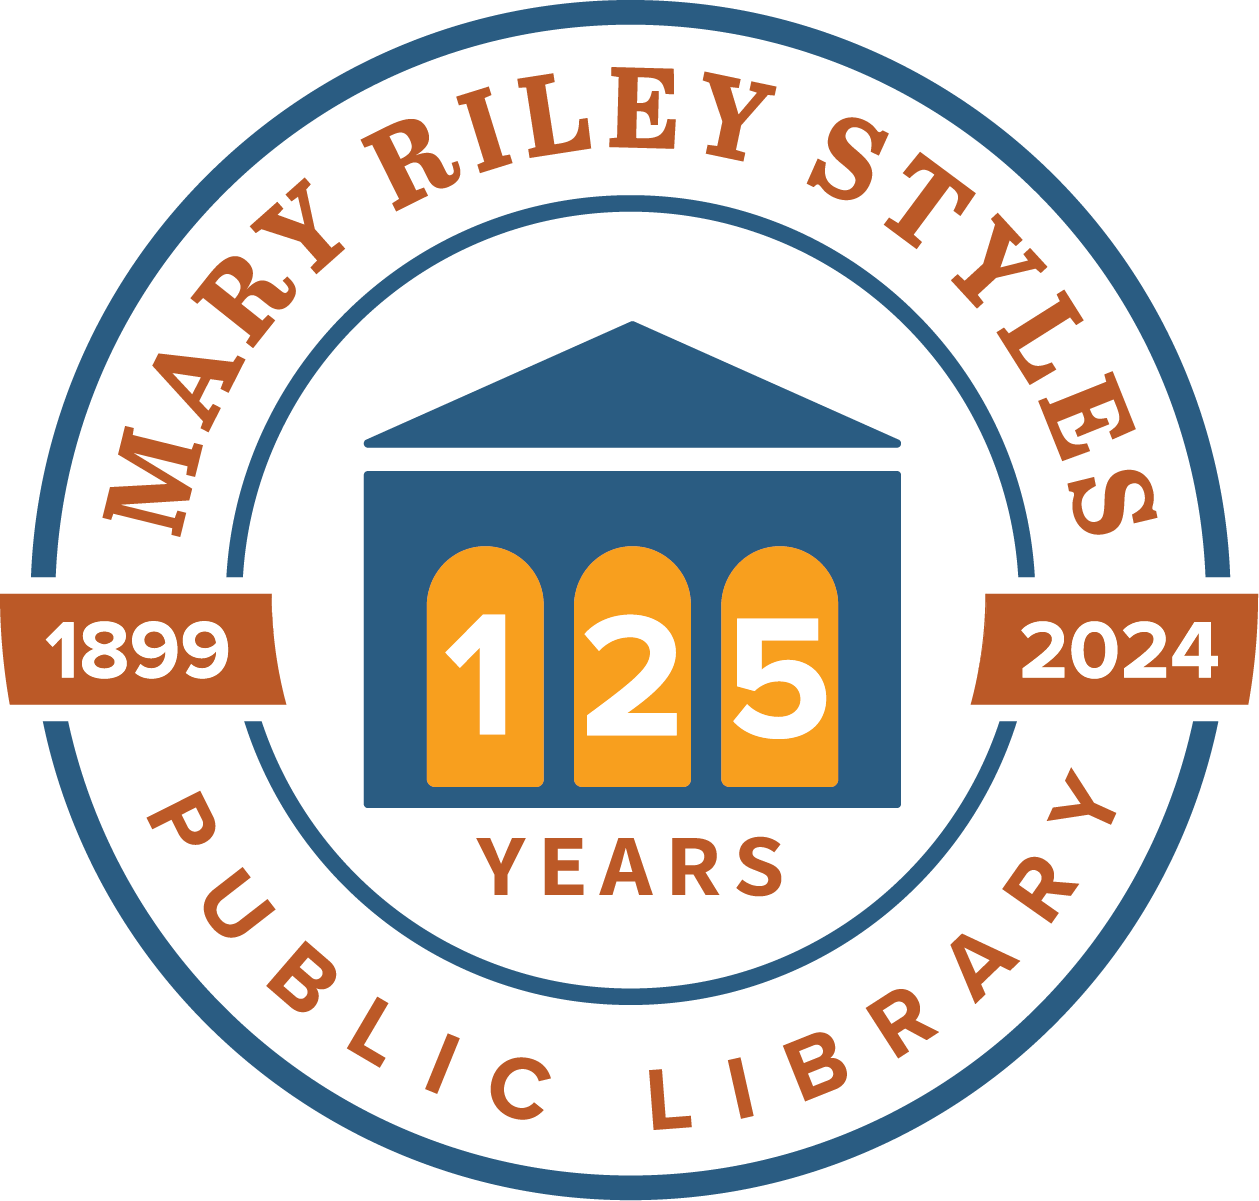 Mary Riley Styles Public Library 125th Anniversary logo